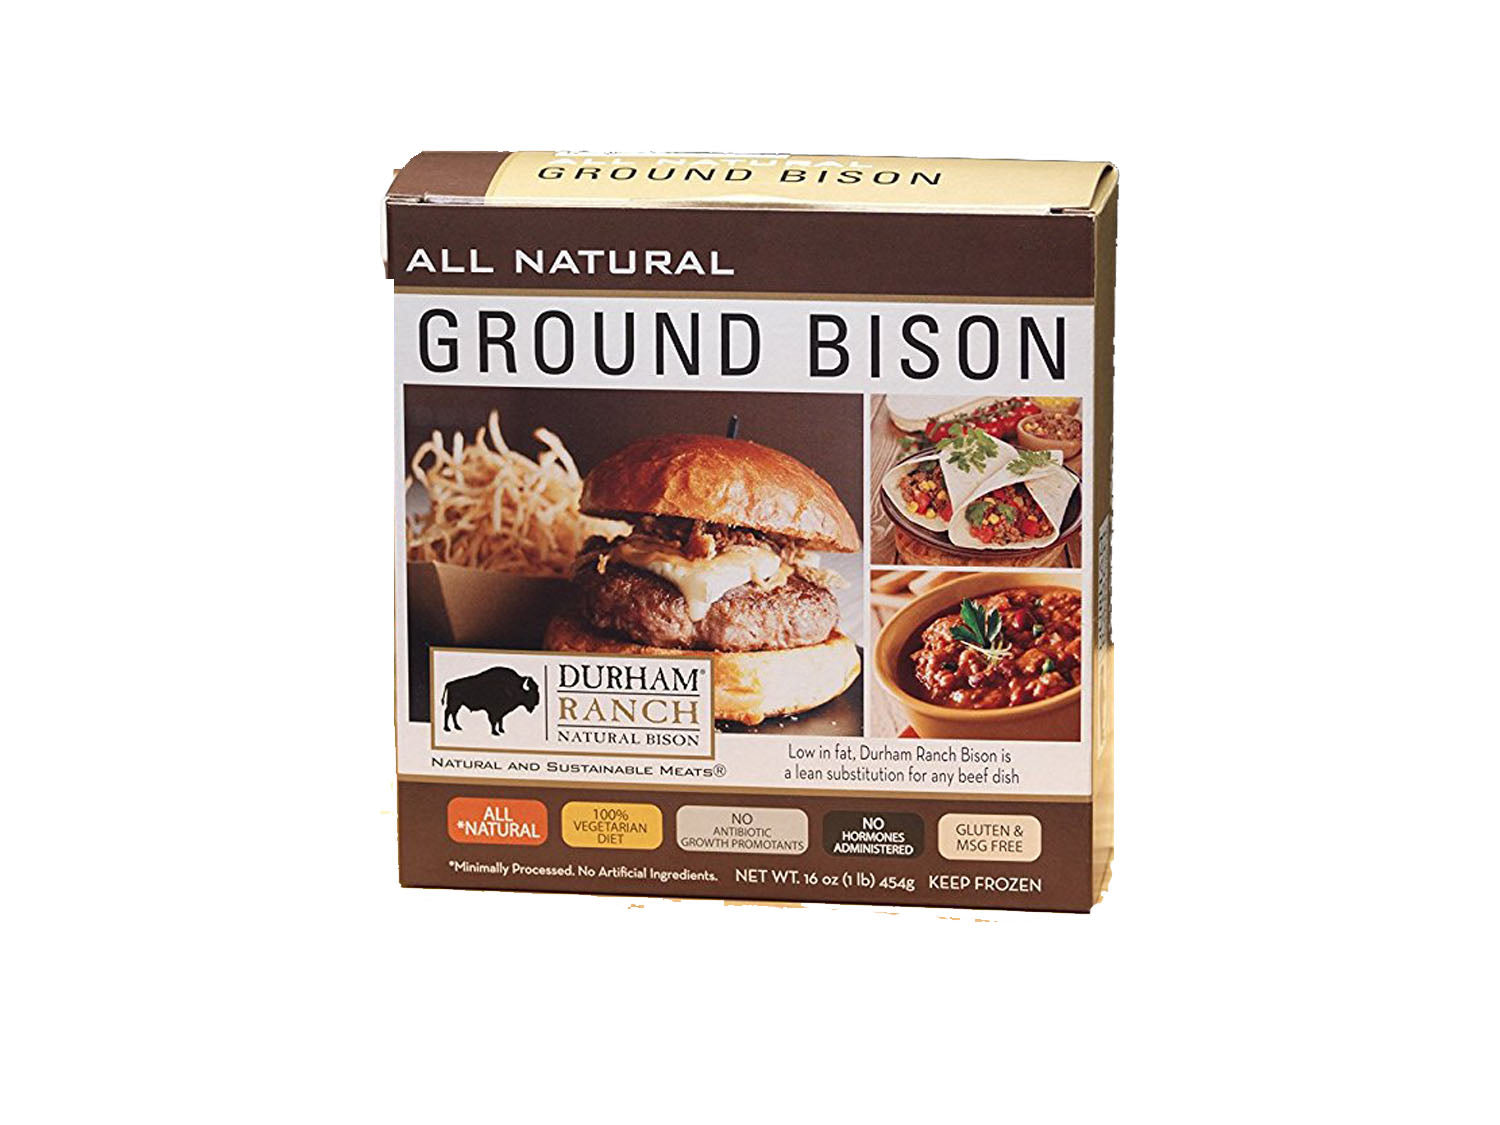 DURHAM RANCH: Ground Bison, 16 oz - Vending Business Solutions